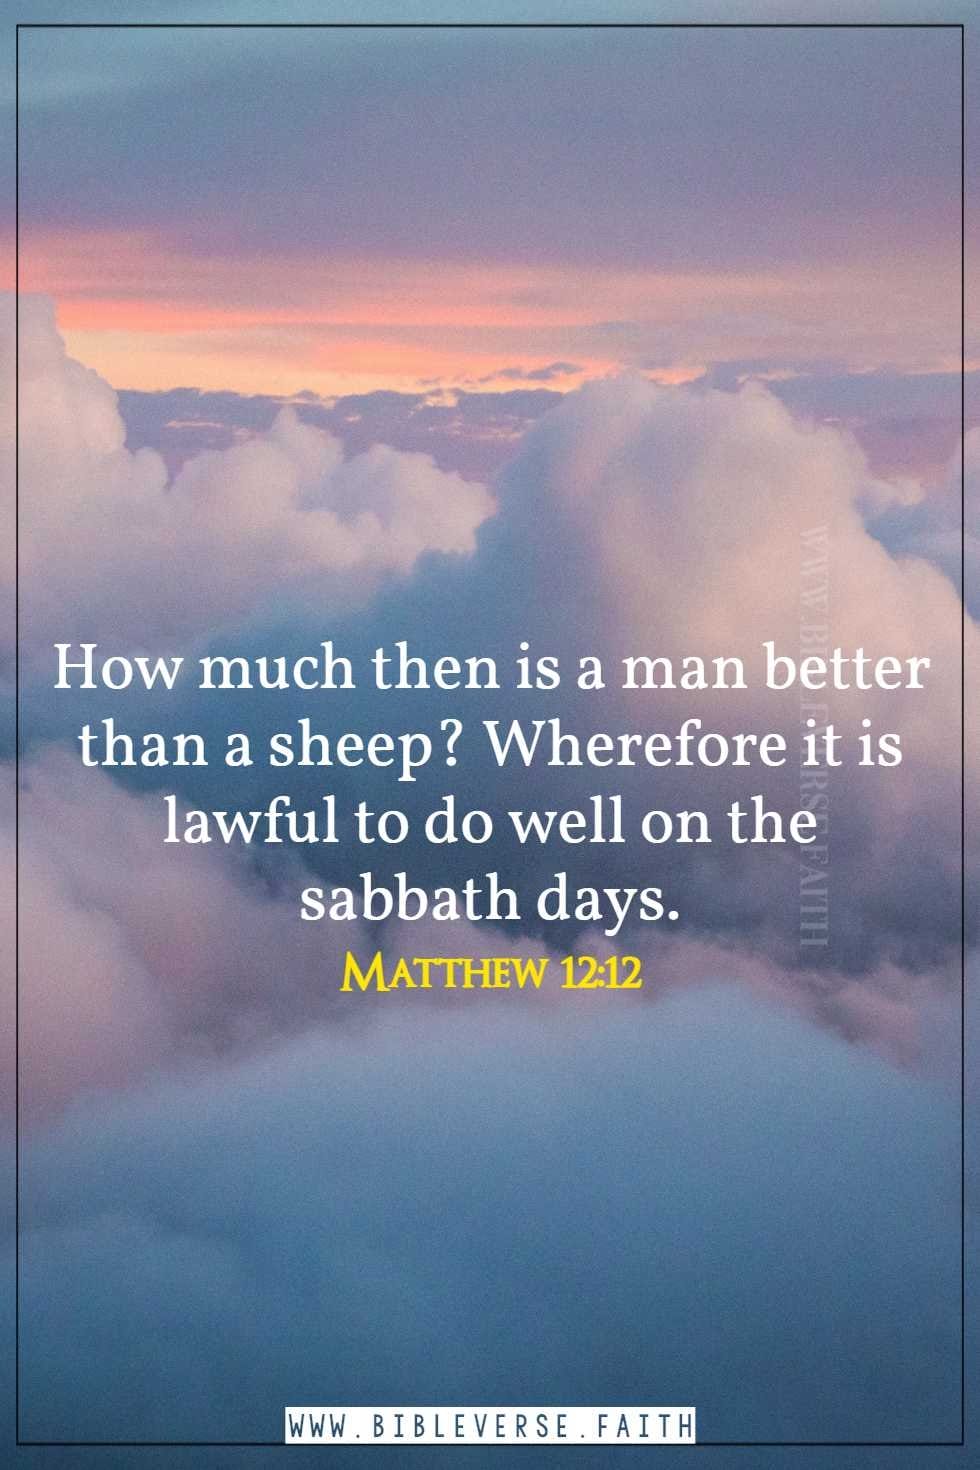 matthew 12 12 abba in the bible